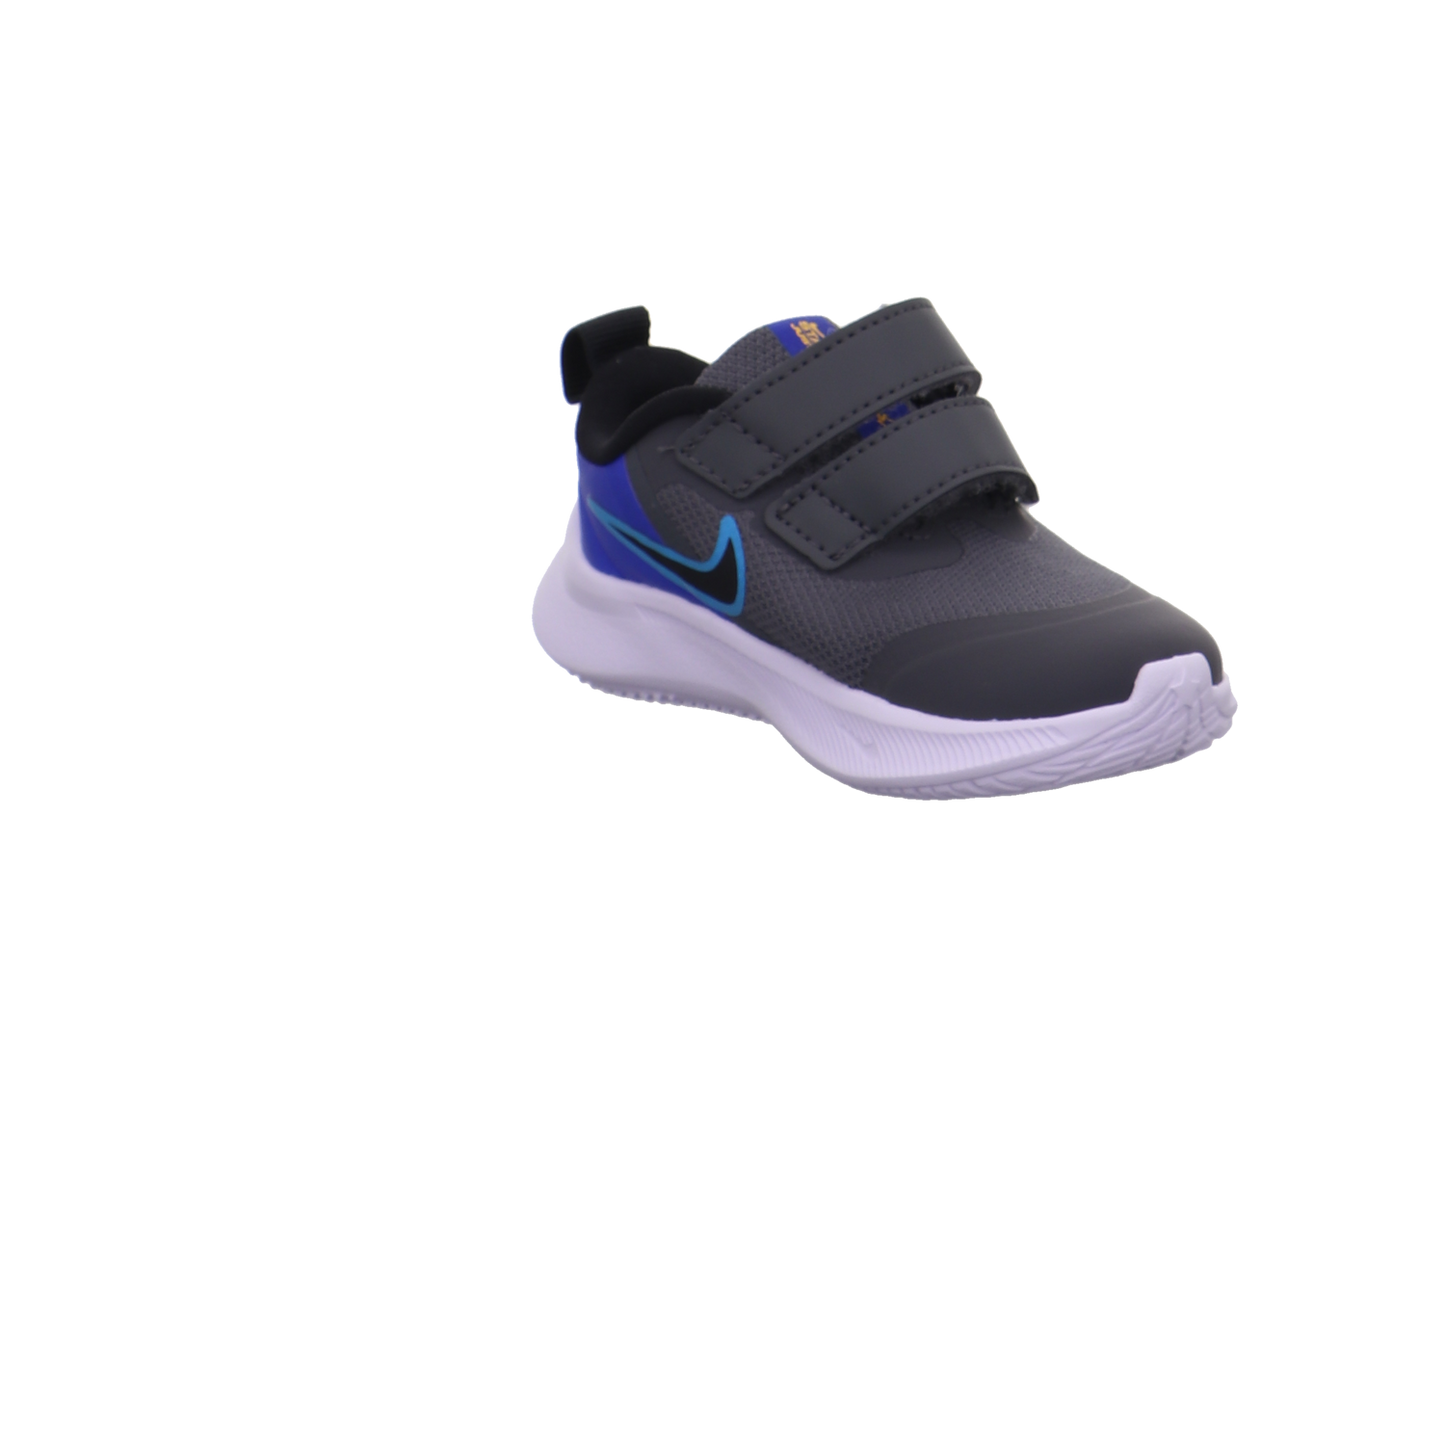 Nike Krabbel- und Lauflernschuhe grau kombi Bild7